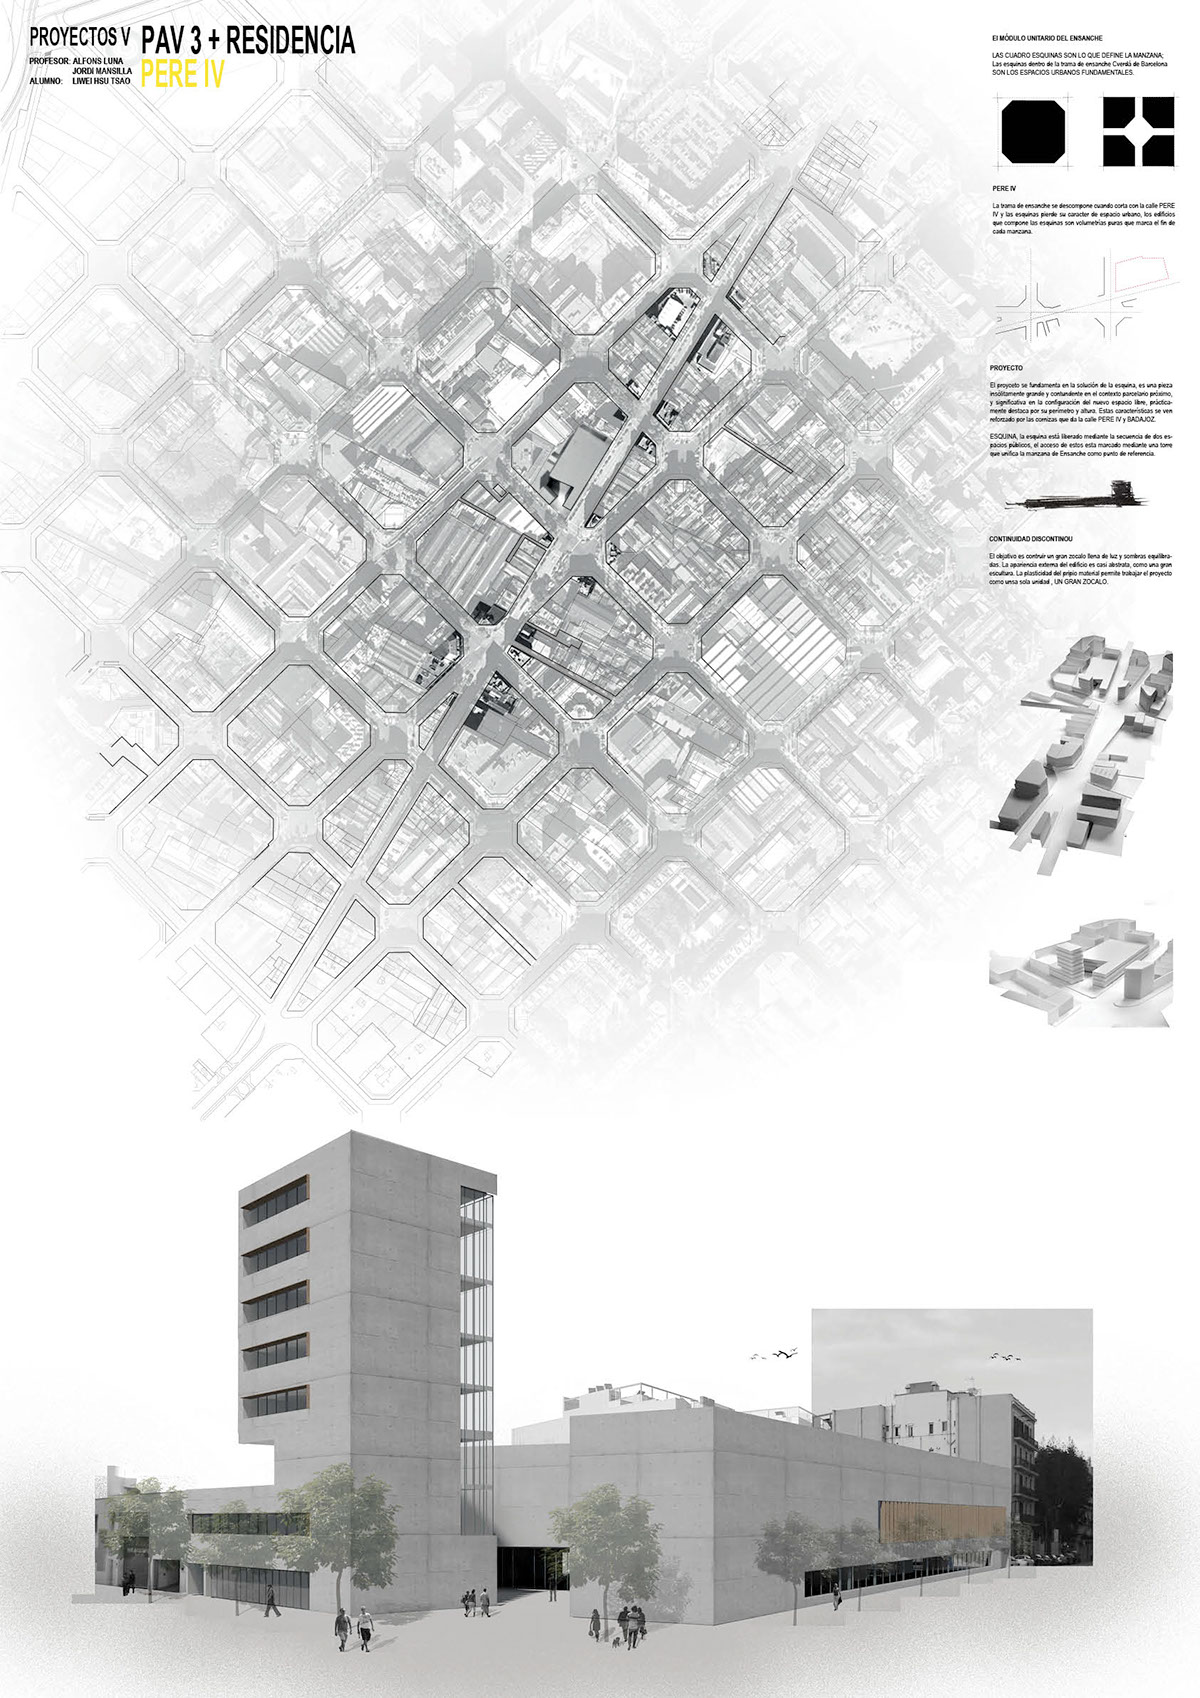 SPORT CENTRE Student's Residence liwei hsu tsao barcelona conceptualization 3D rendering